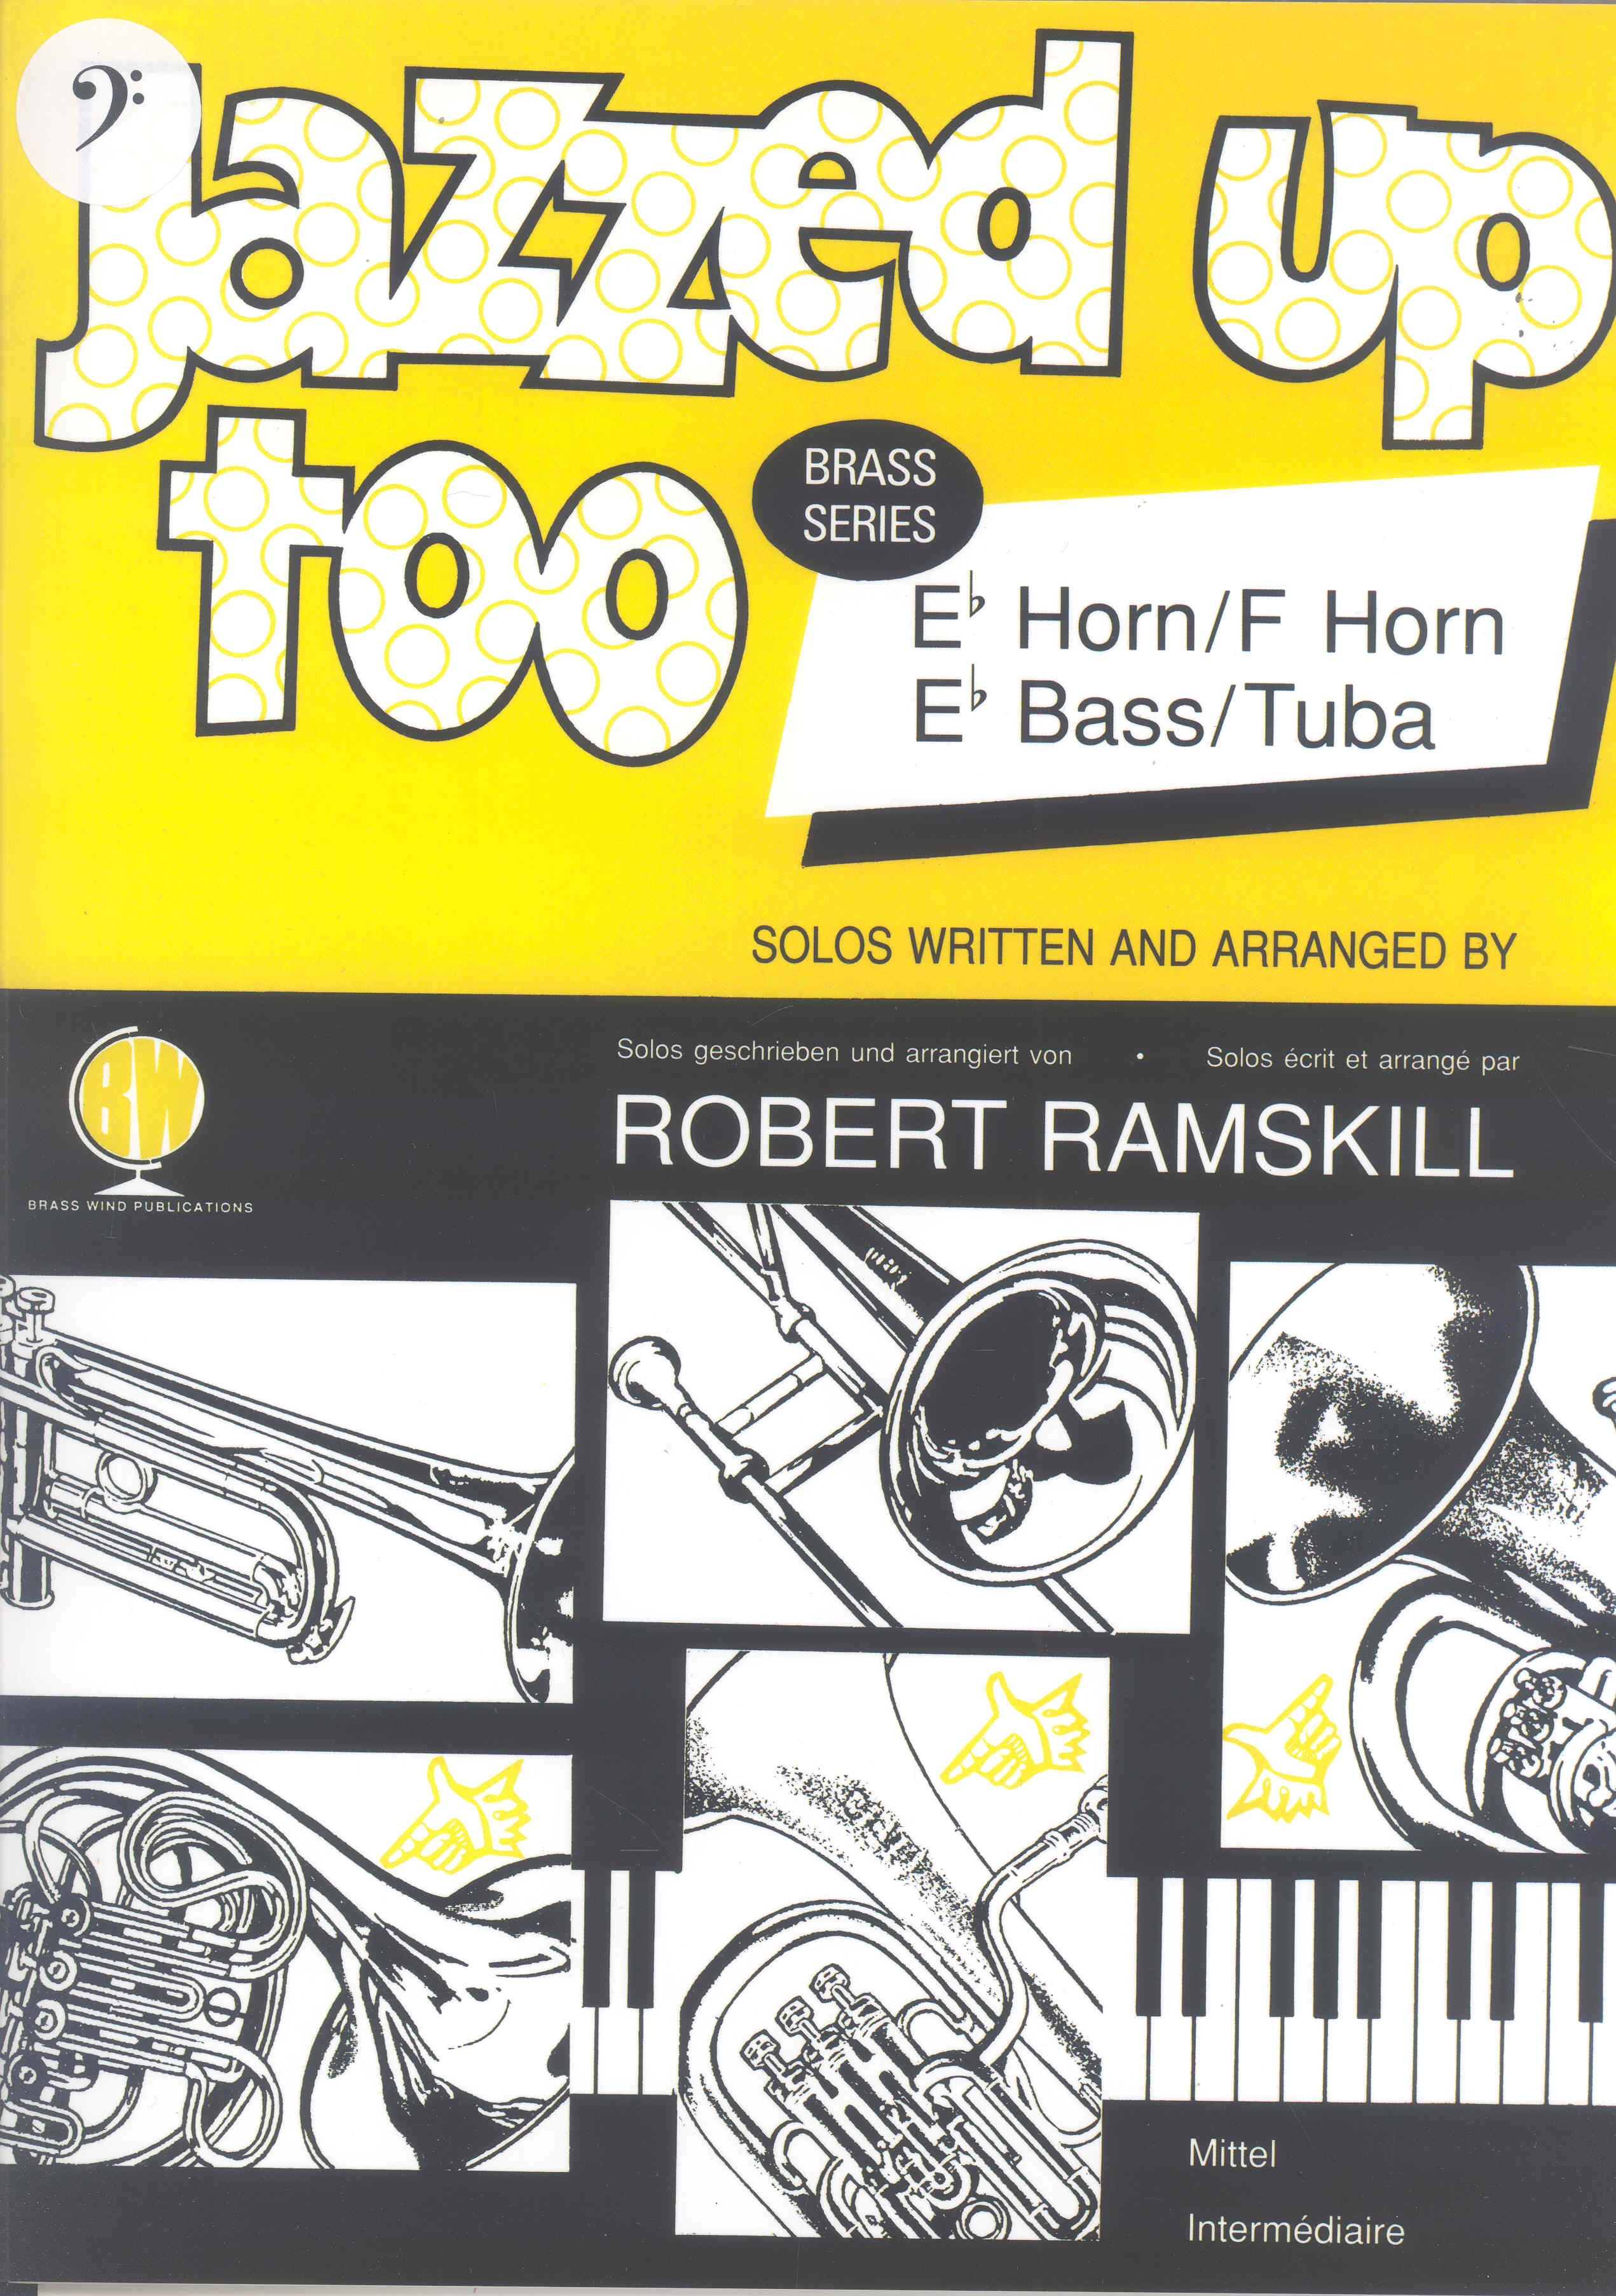 Jazzed Up Too Eb Tuba/bass Ramskill Bass Clef Sheet Music Songbook